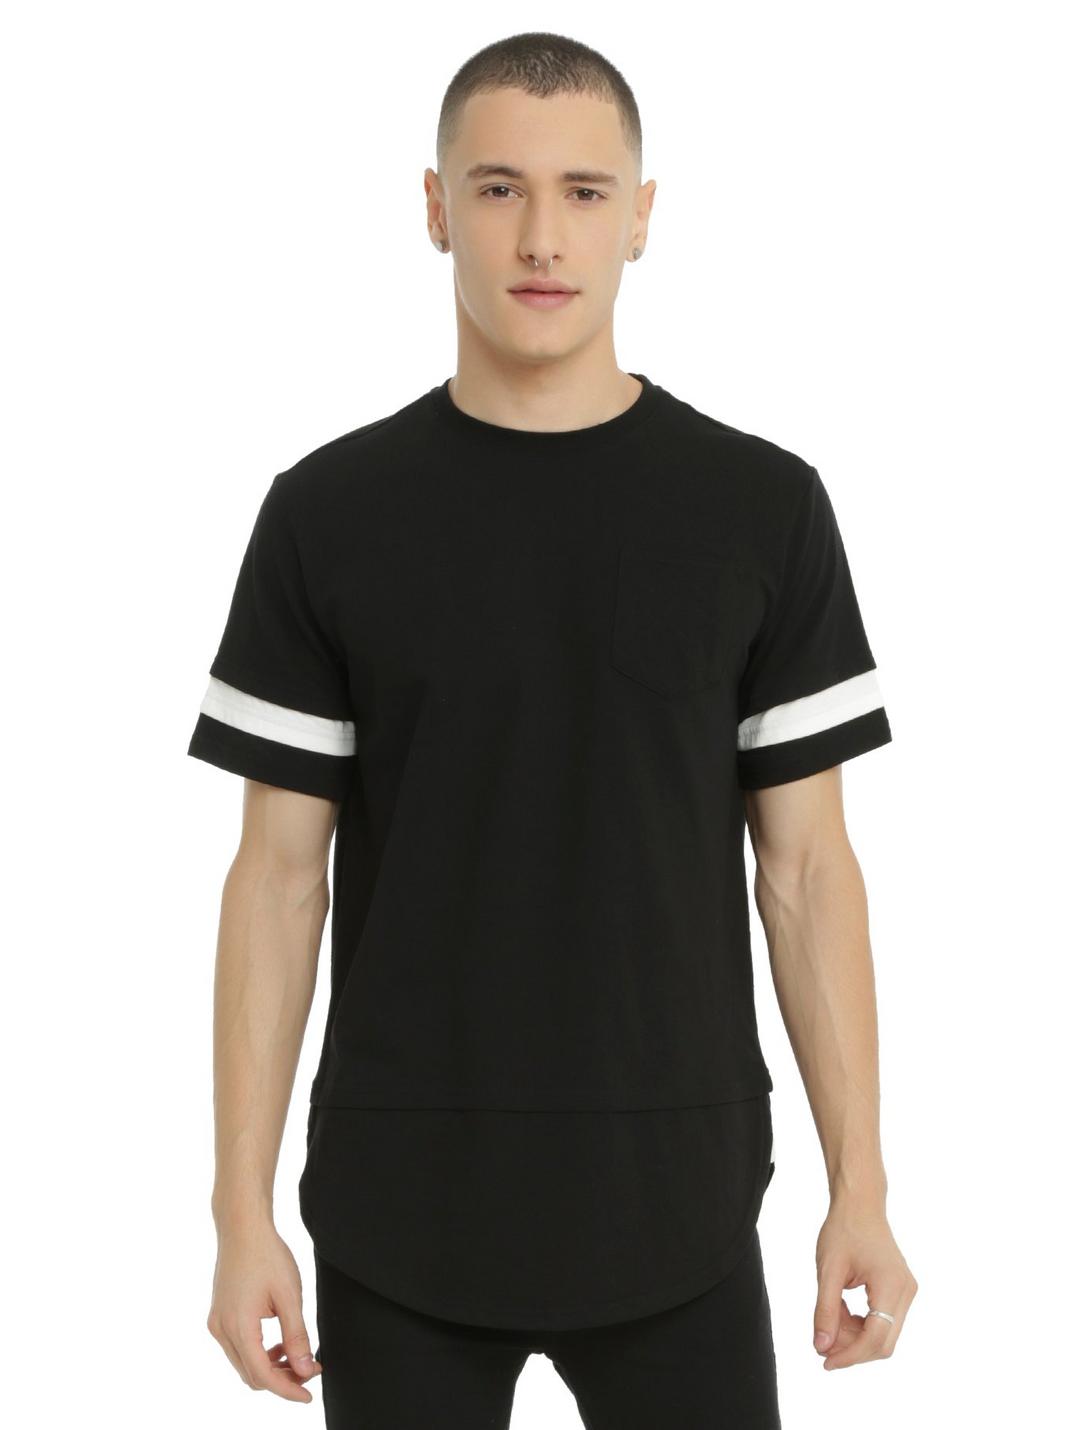 KDNK Black & White Trim Curved Hem T-Shirt, BLACK, hi-res